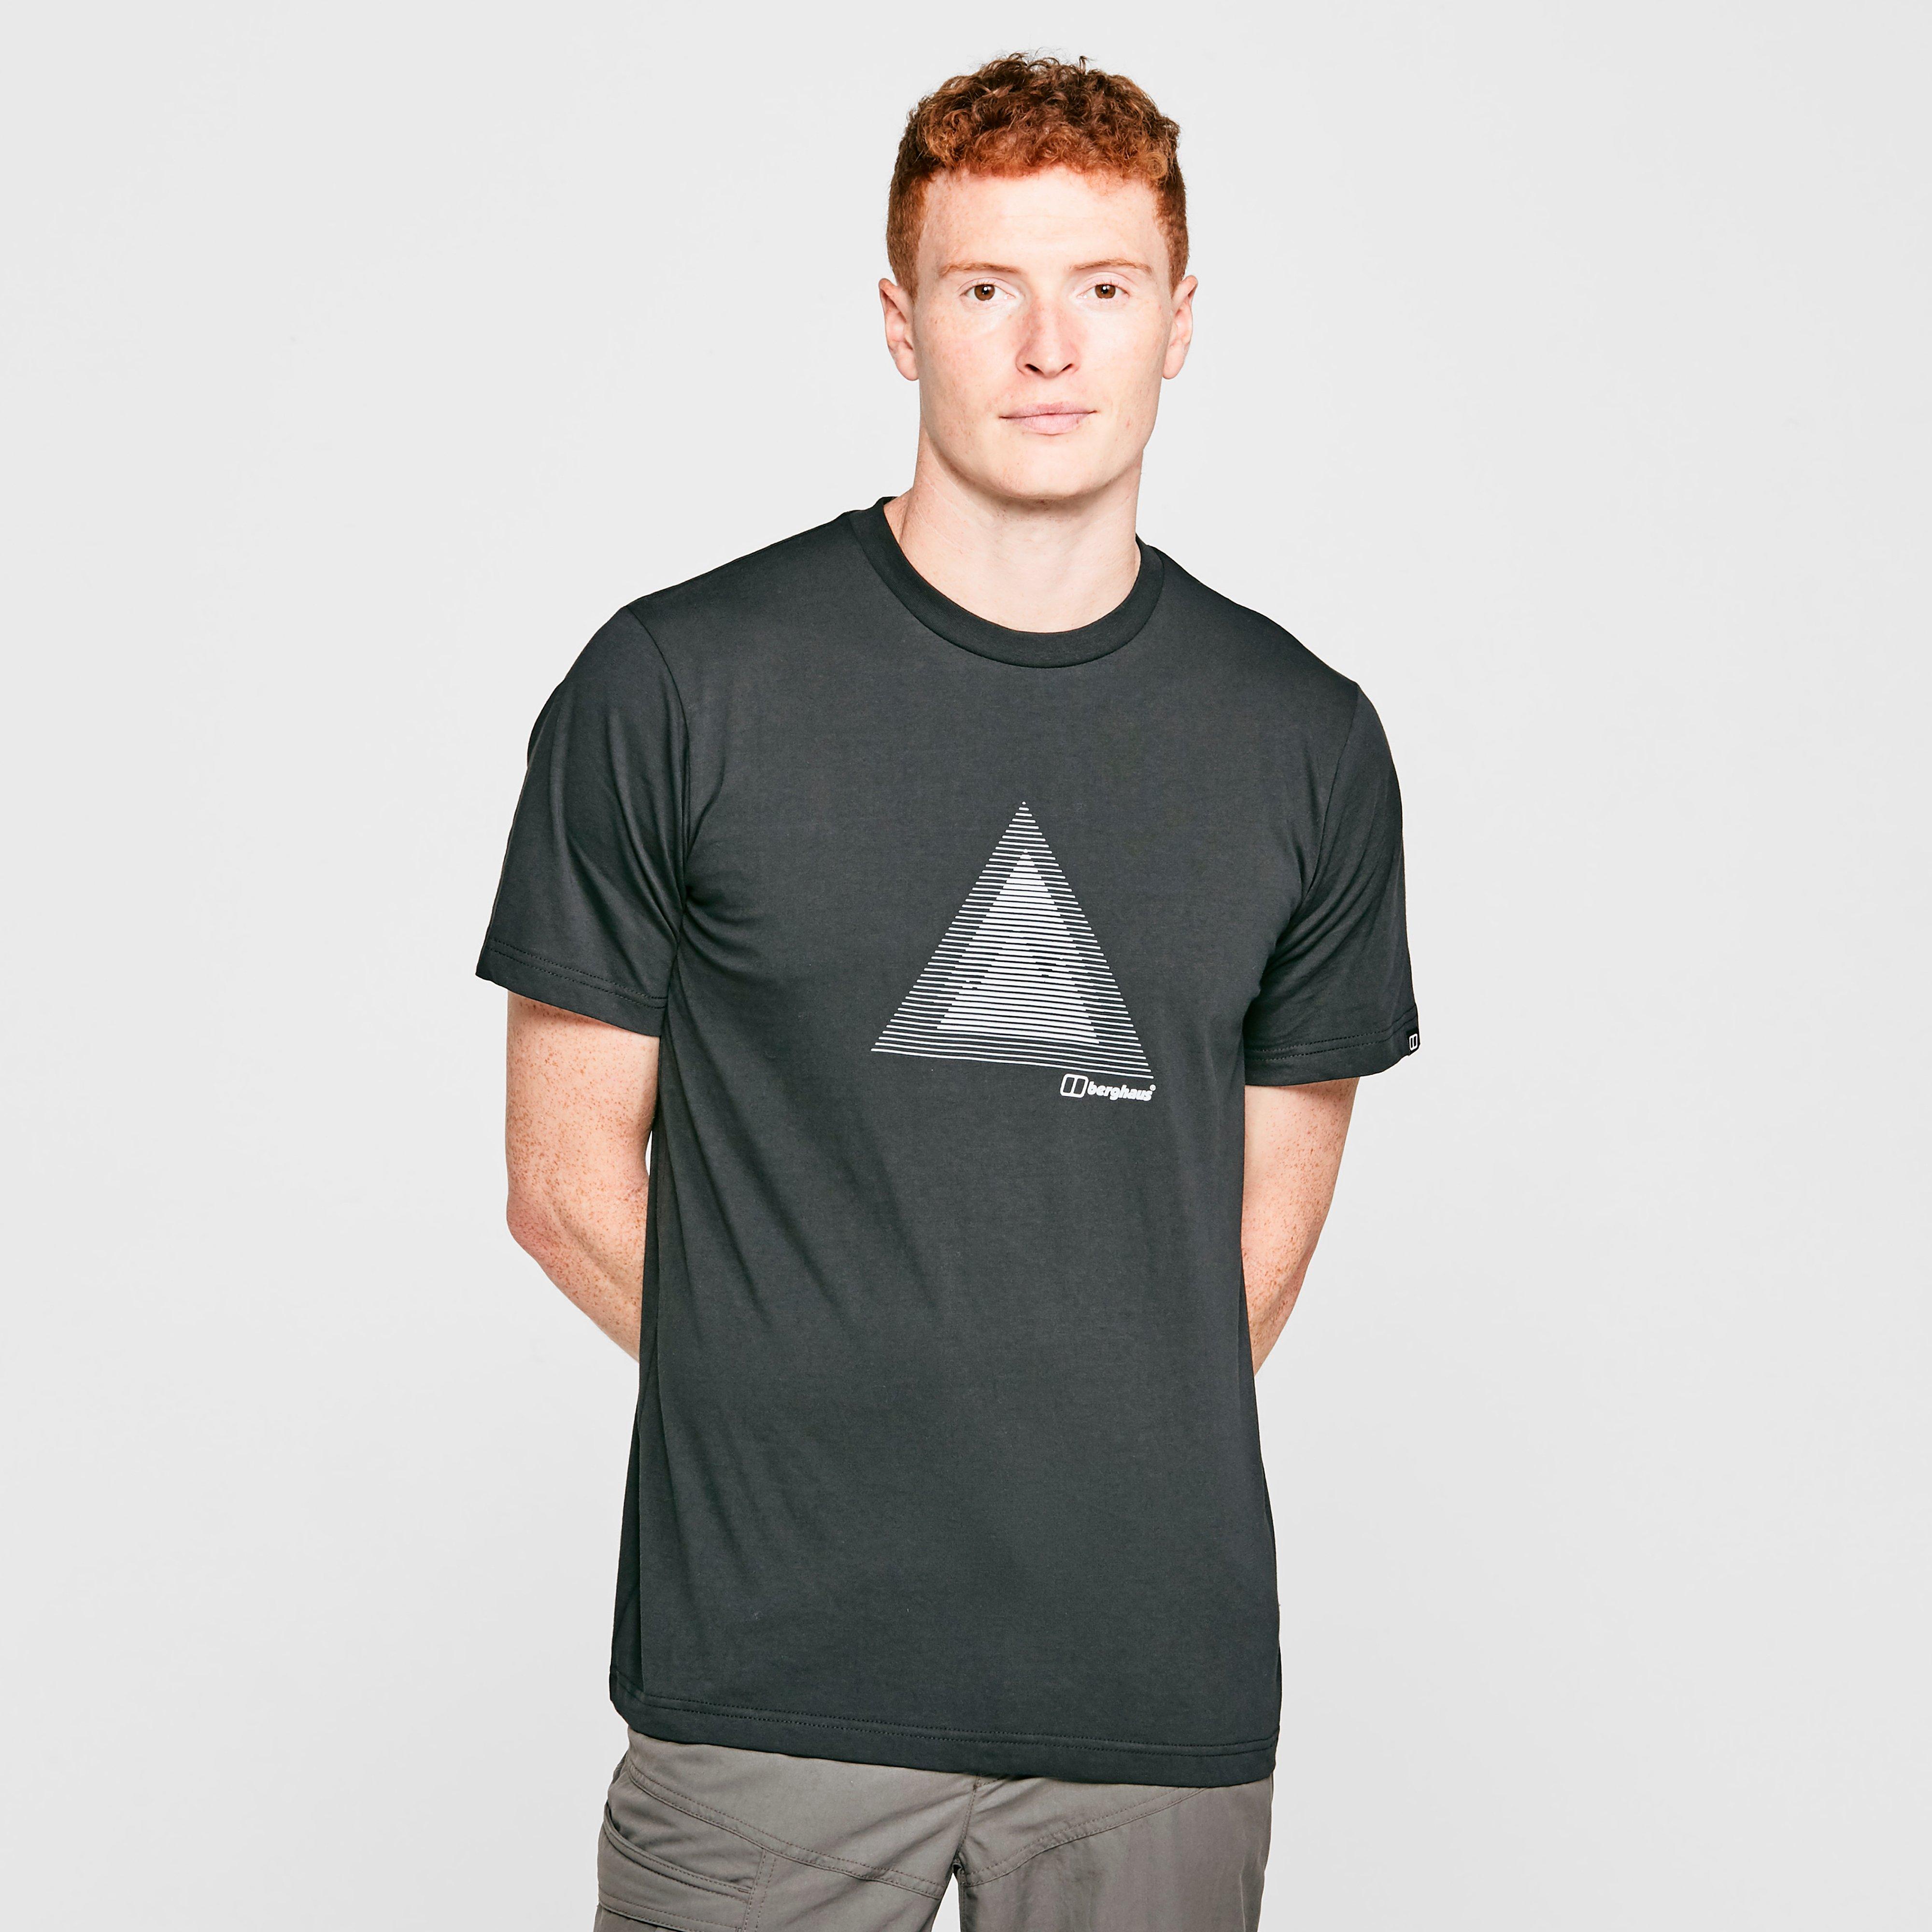 Image of Berghaus Men's Modern Mountain T-Shirt - Black/Blk, Black/BLK